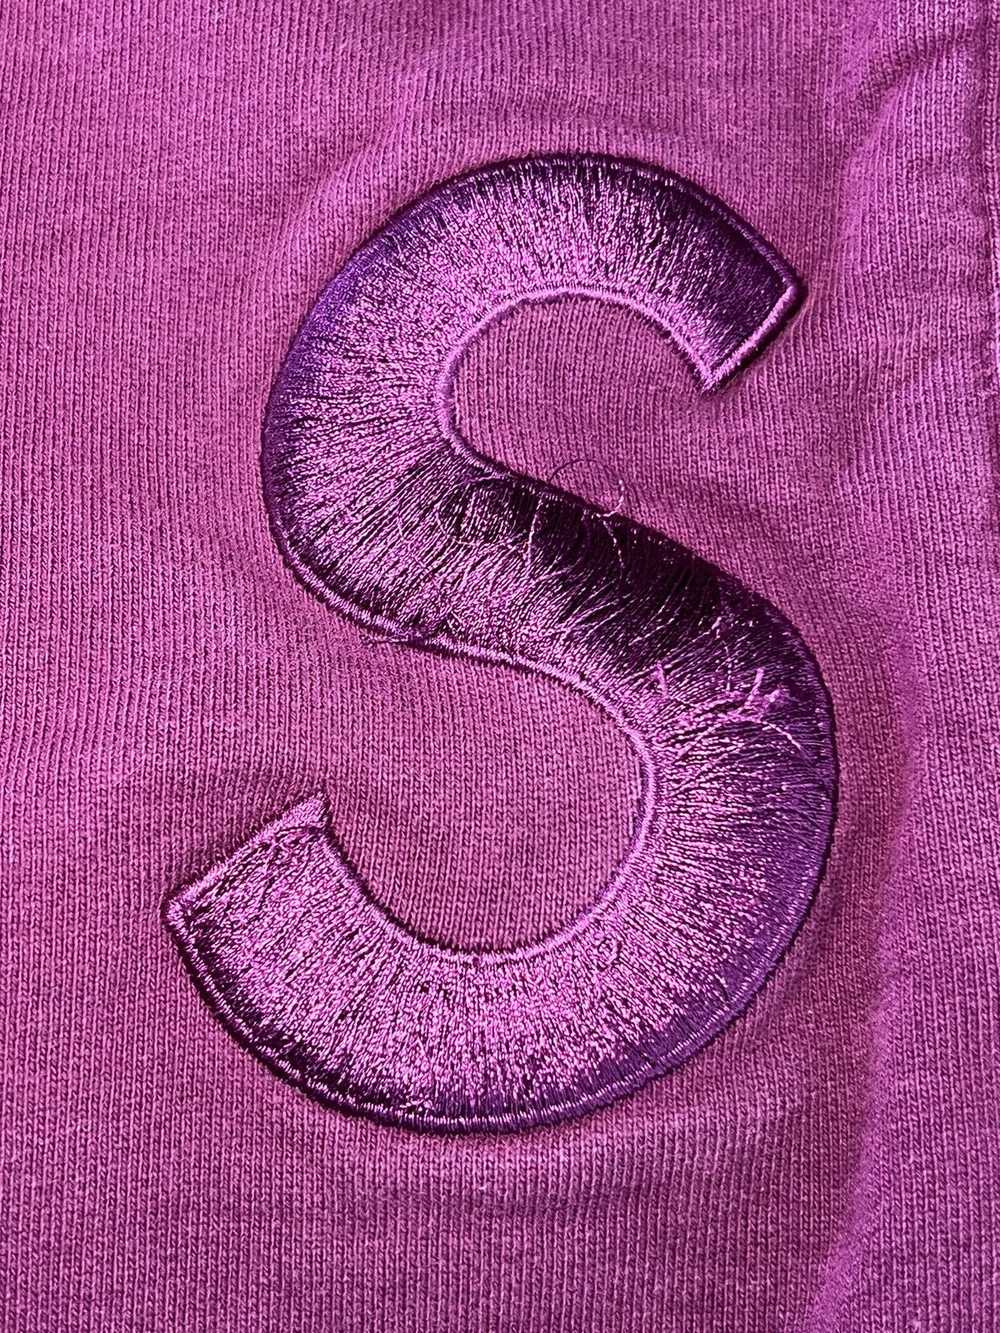 Supreme Supreme Tonal S Logo Sweatpant Plum purple - image 5